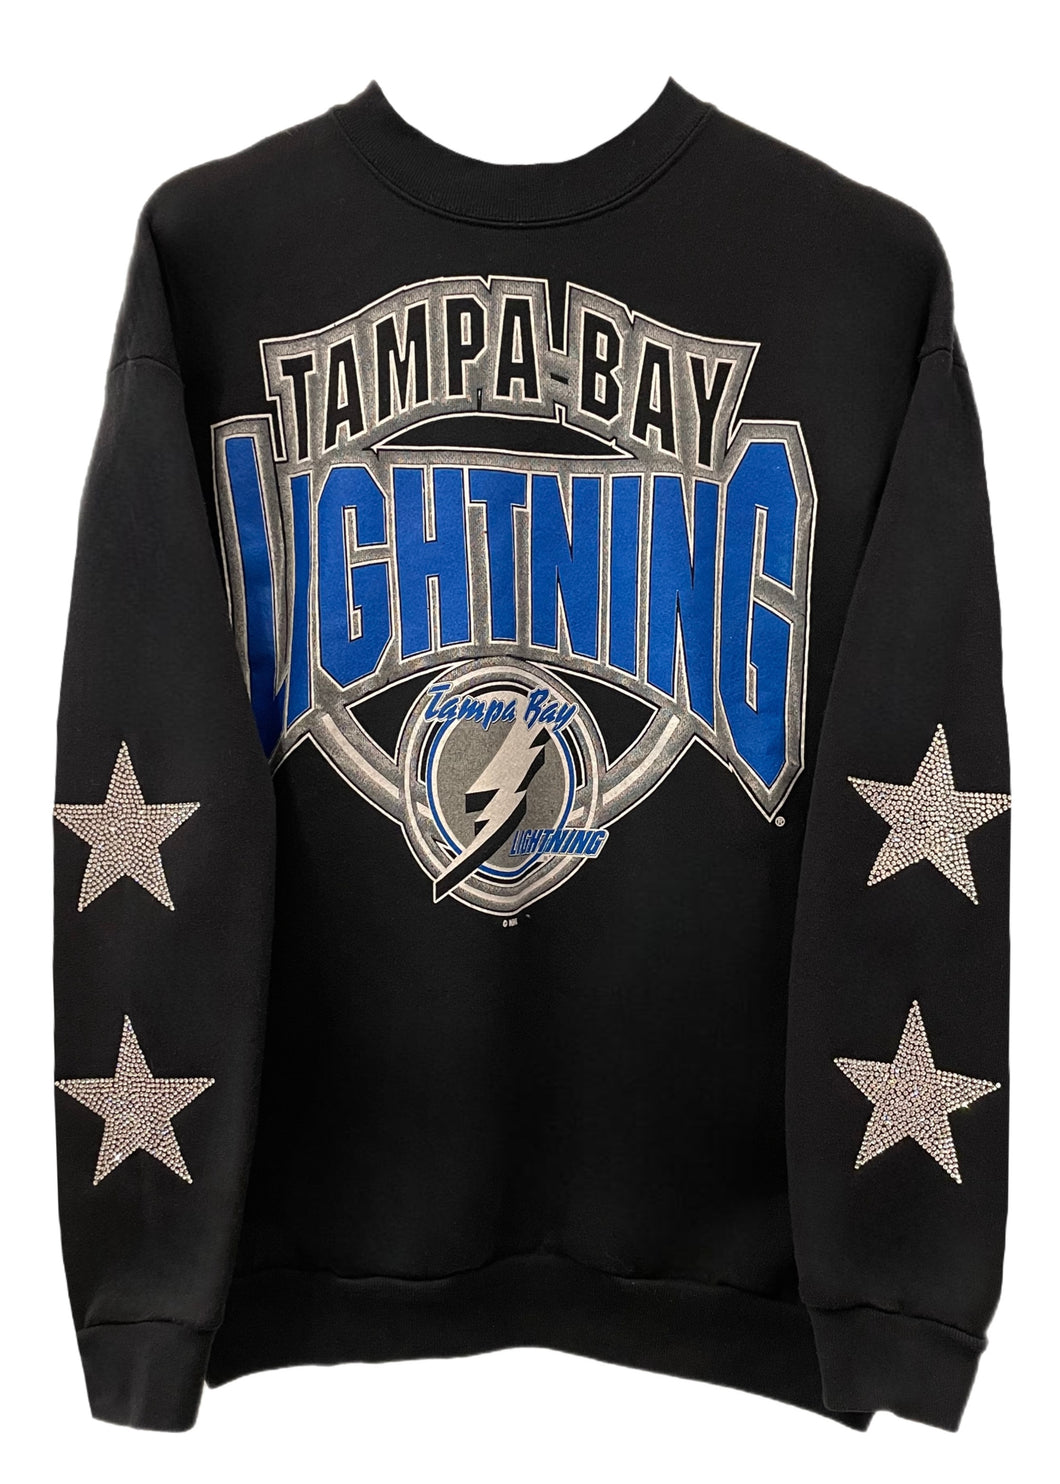 Tampa Bay Lightning, NHL One of a KIND Vintage Sweatshirt with Crystal Star Design